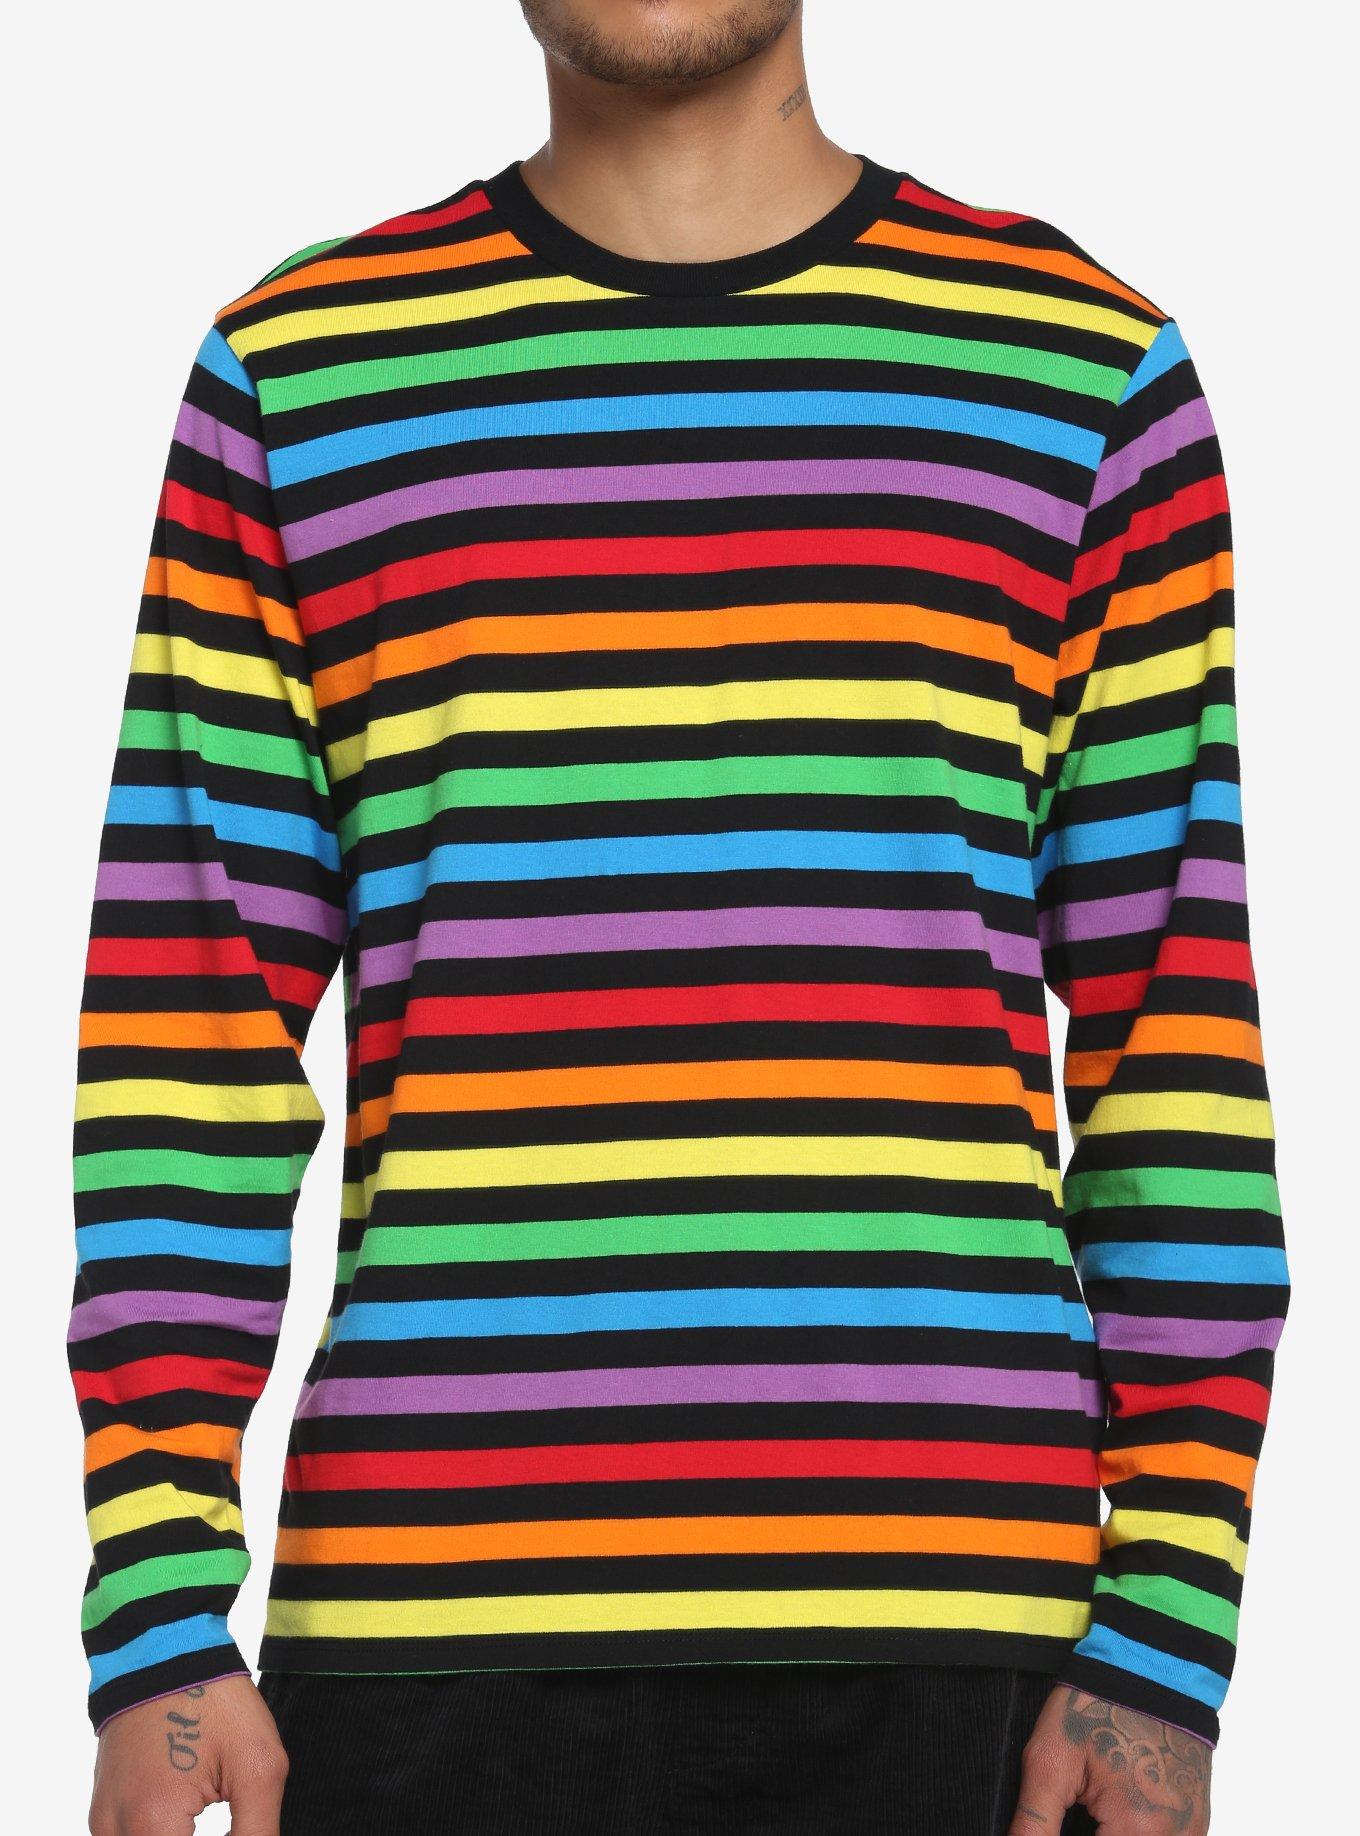 Black & Rainbow Stripe Long-Sleeve T-Shirt, RAINBOW, hi-res